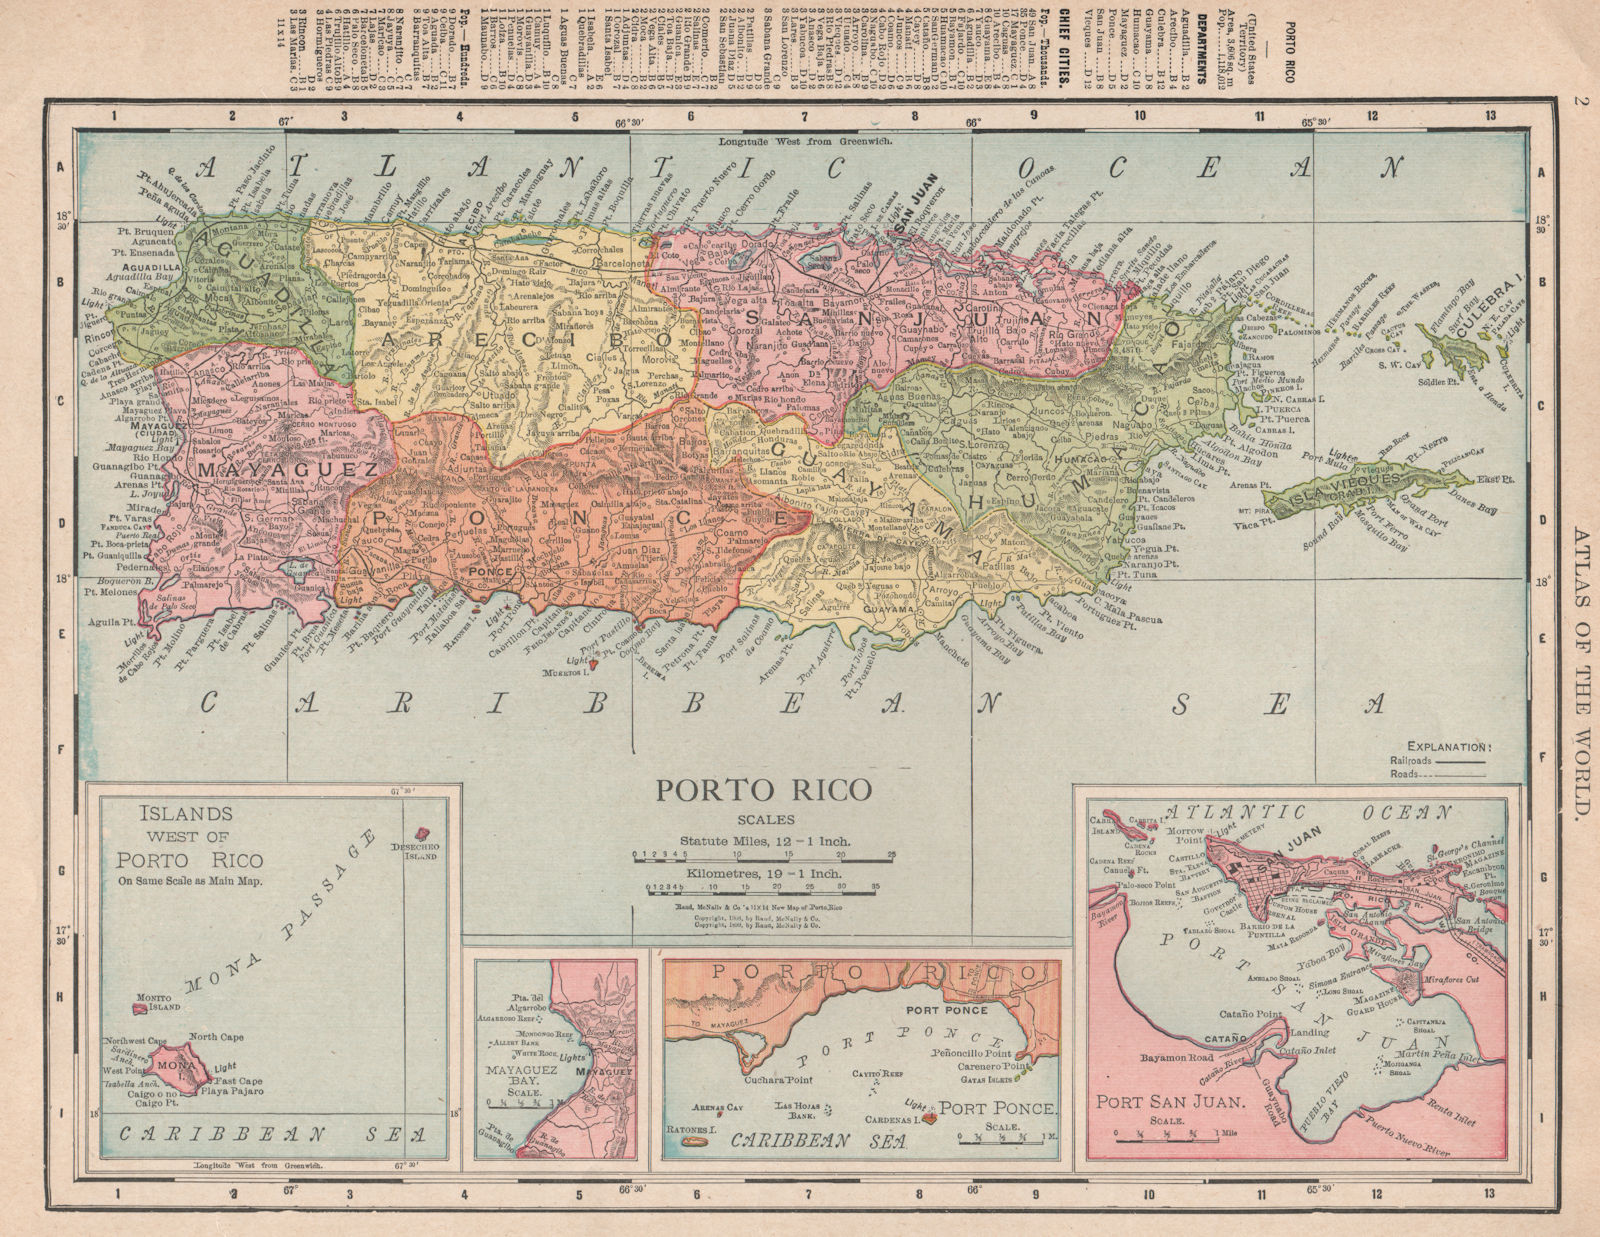 Associate Product PUERTO RICO. Inset Port San Juan. RAND MCNALLY 1912 old antique map plan chart